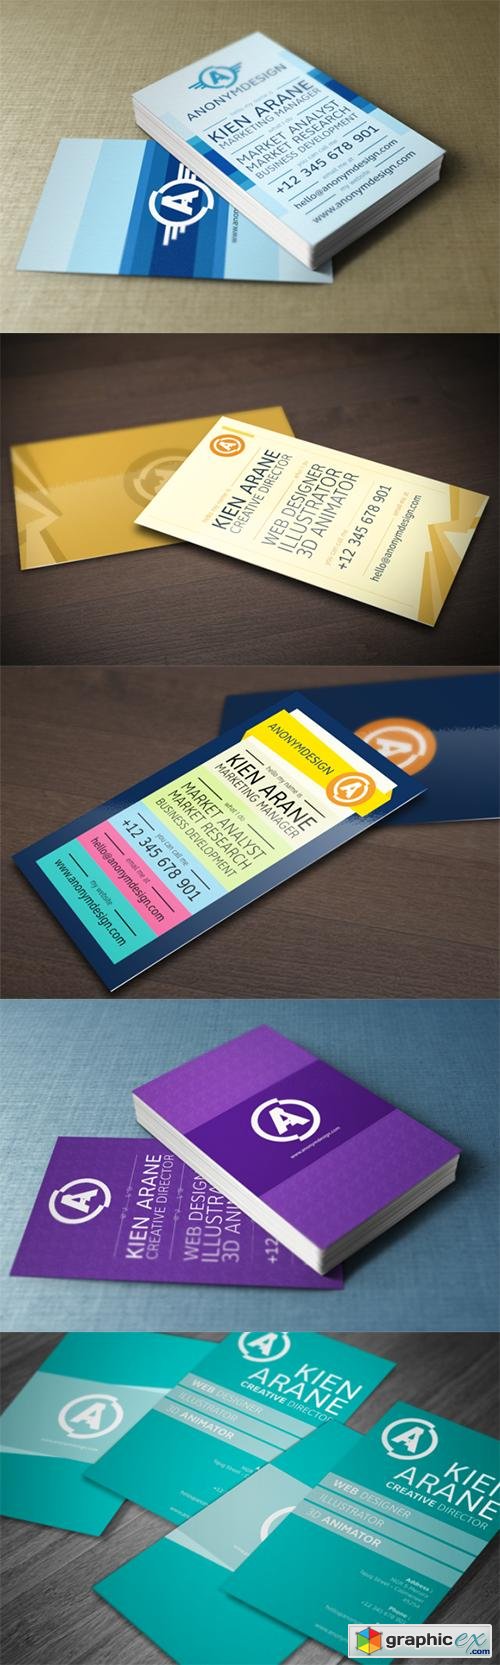  5 Business Card Templates